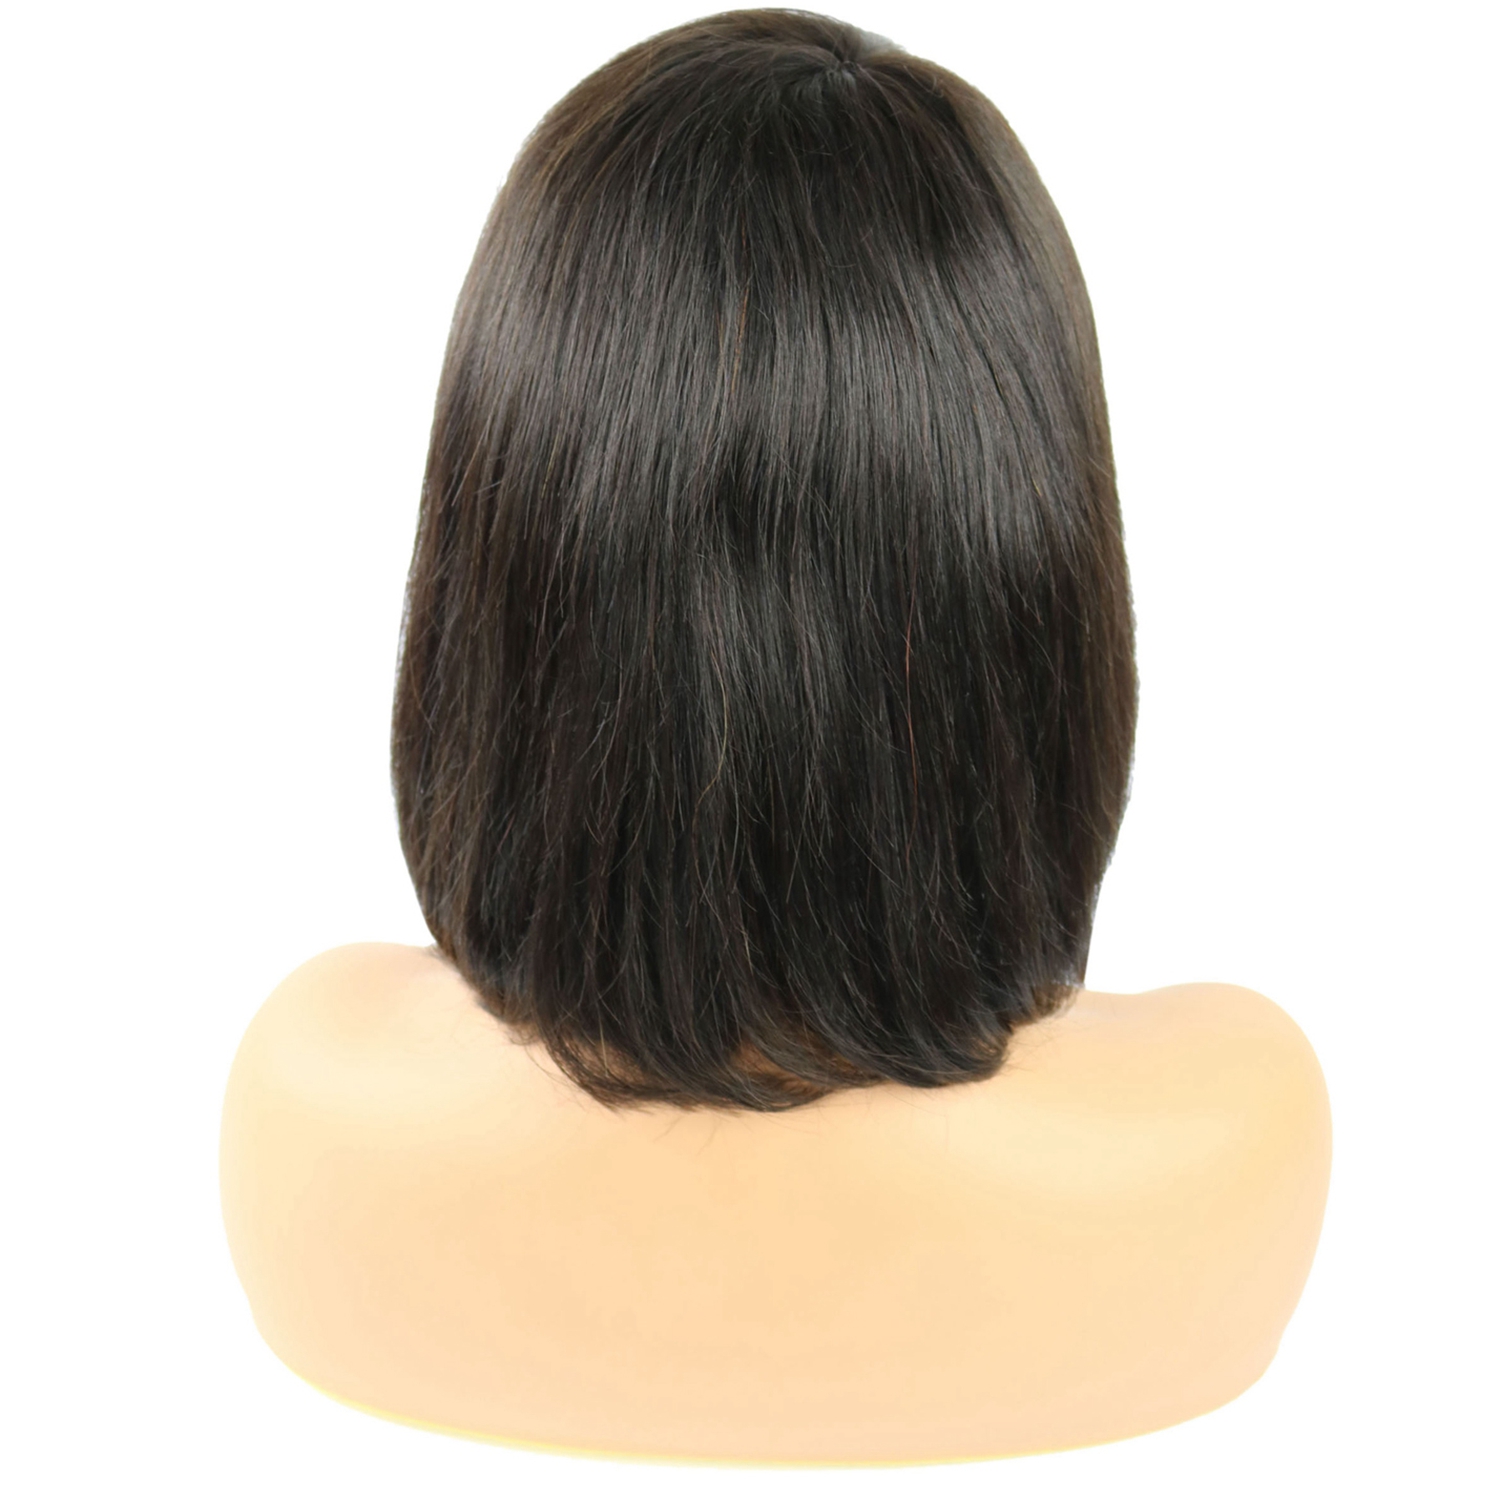 Taraji Henson Short Straight Bob Hair Style Human Hair Capless Wigs 10 Inches